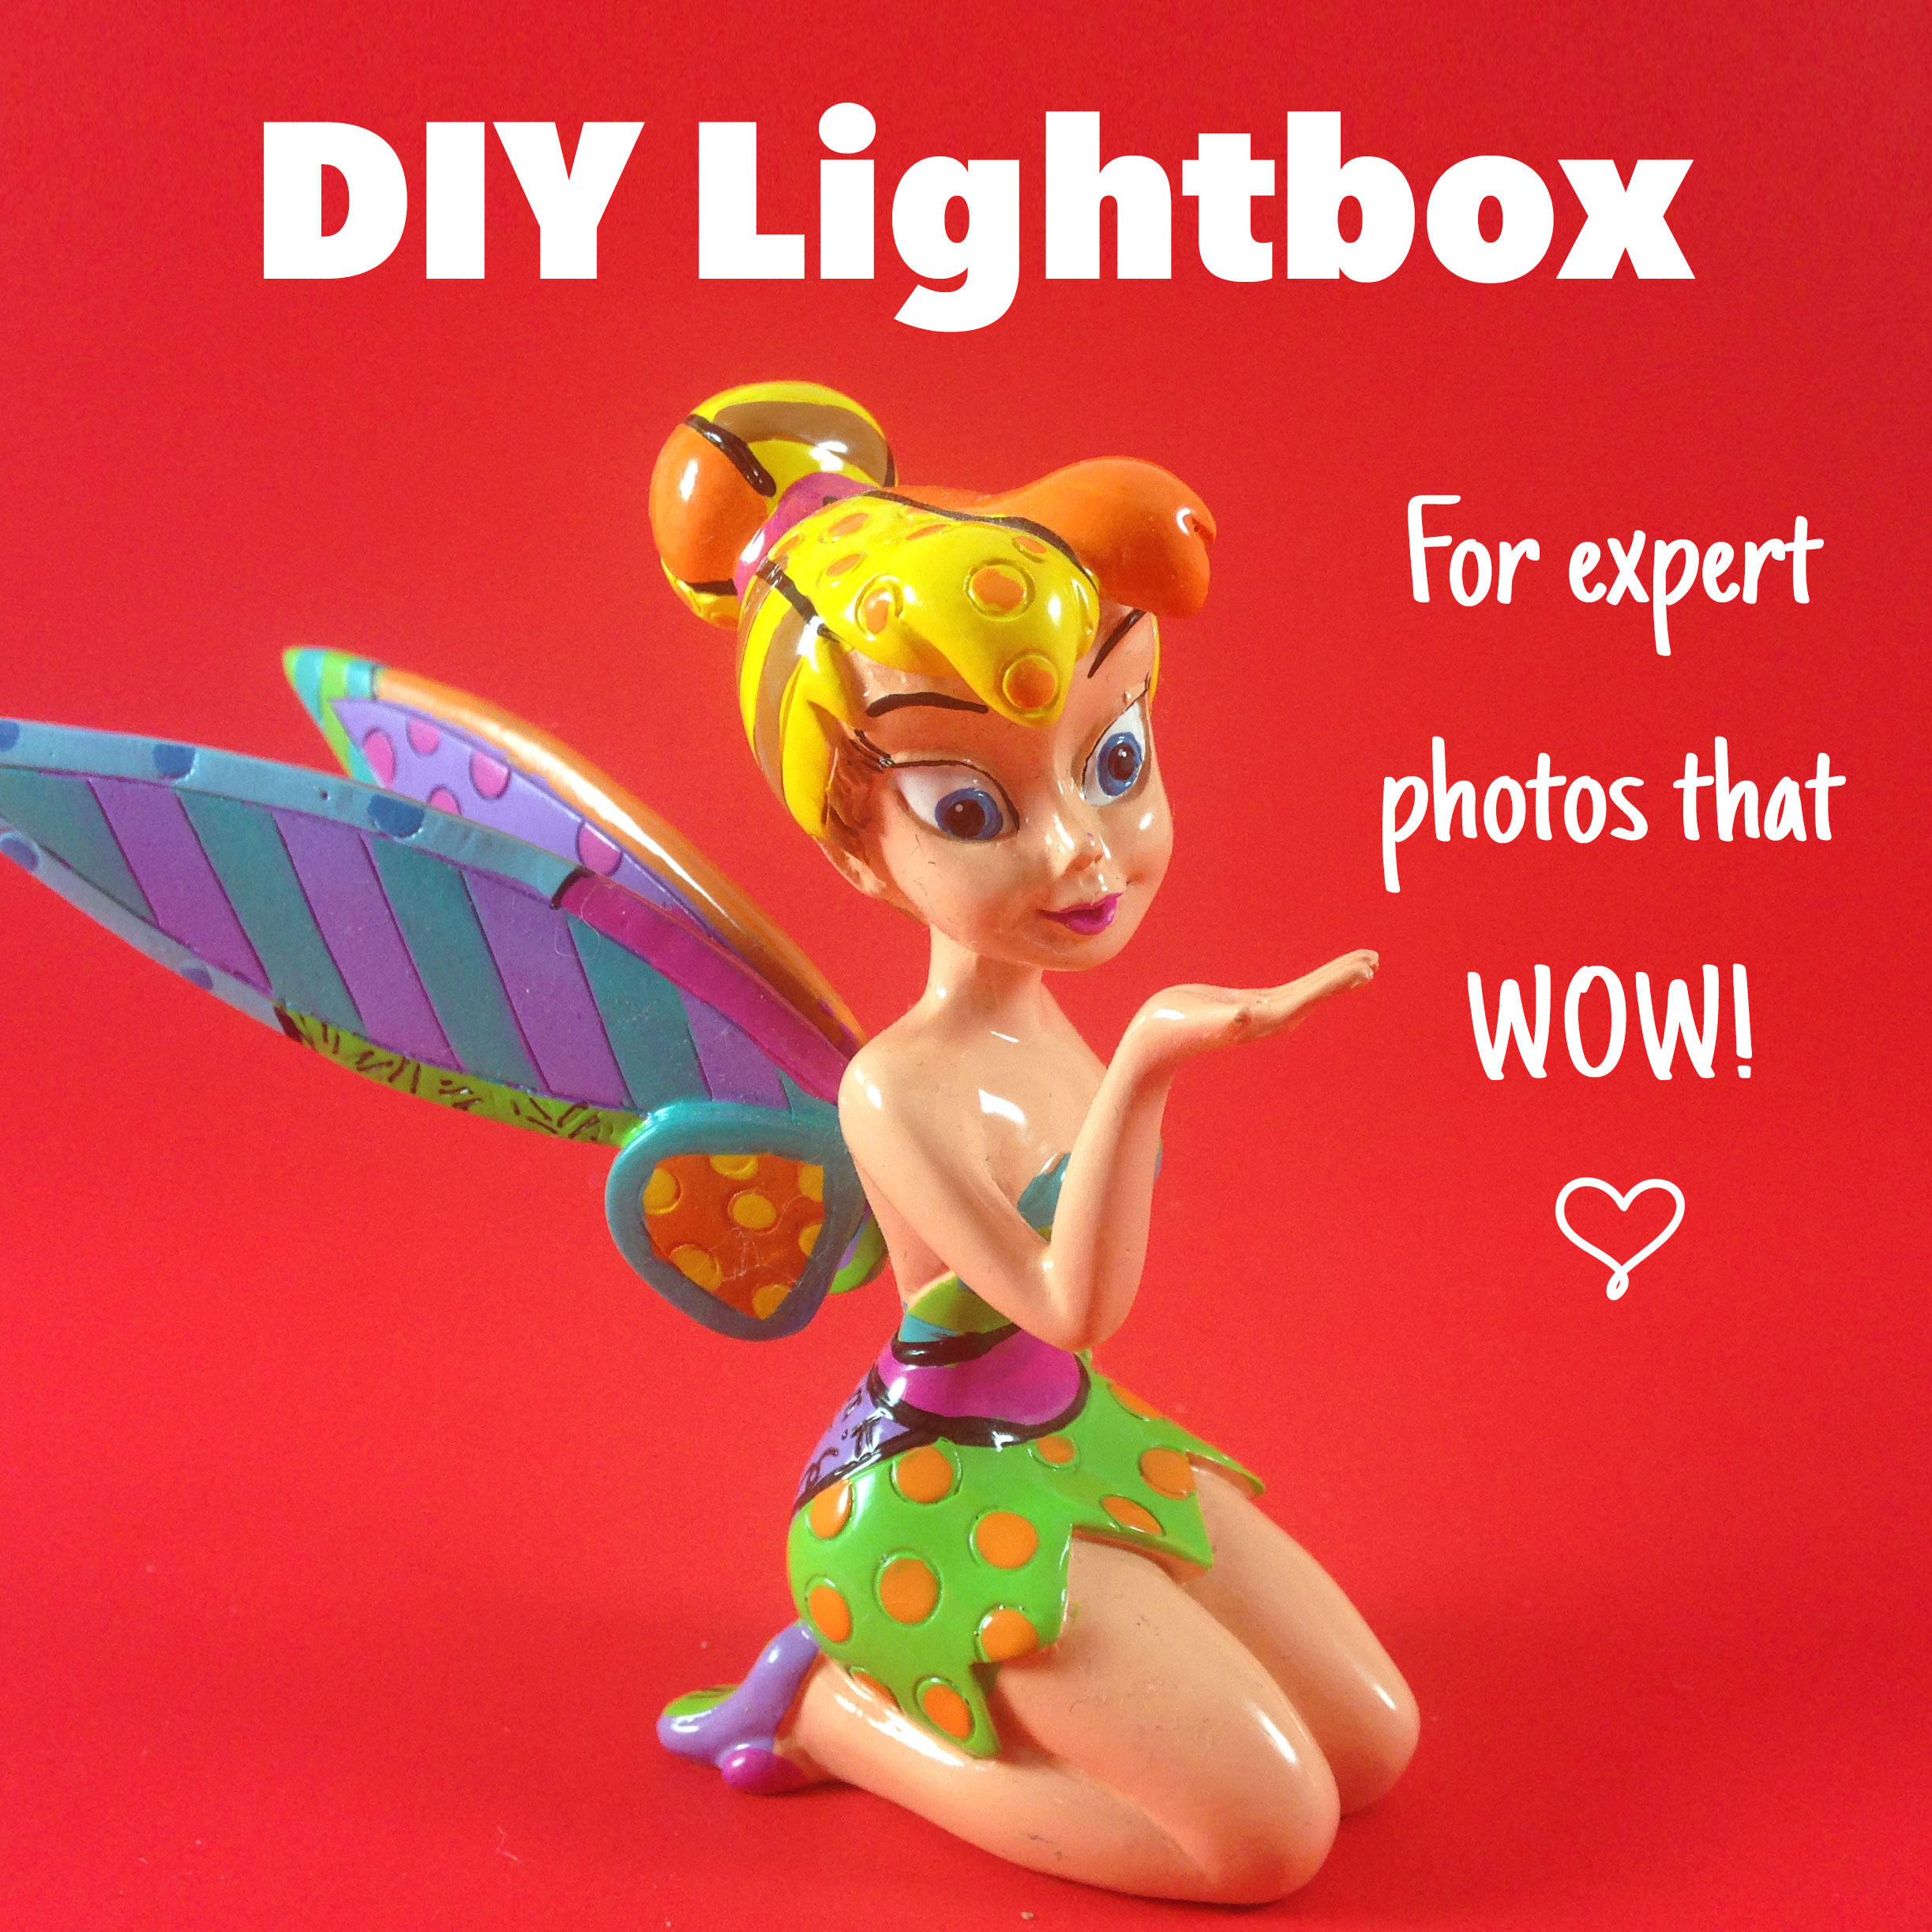 DIY Lightbox for Expert Photos that Wow! Step-By-Step Tutorial | JenuineMom.com